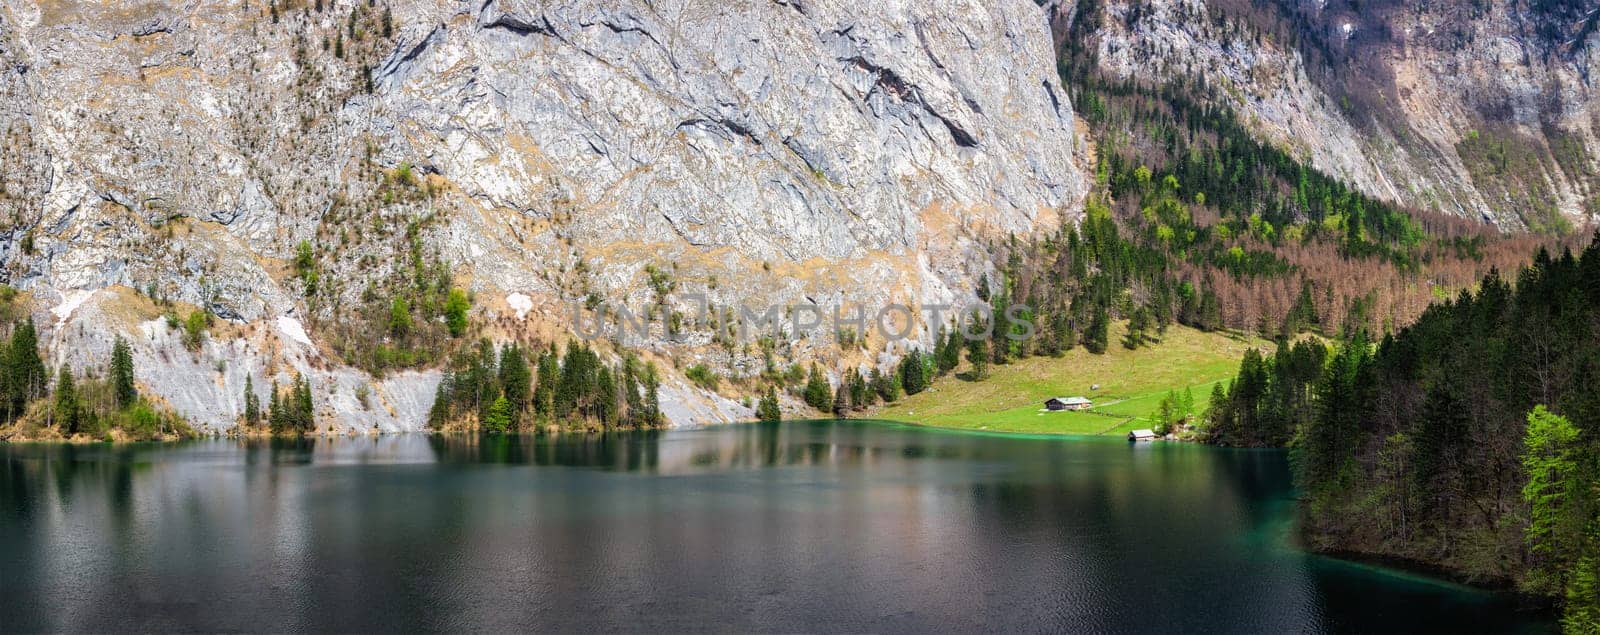 Obersee lake. Bavaria, Germany by dimol